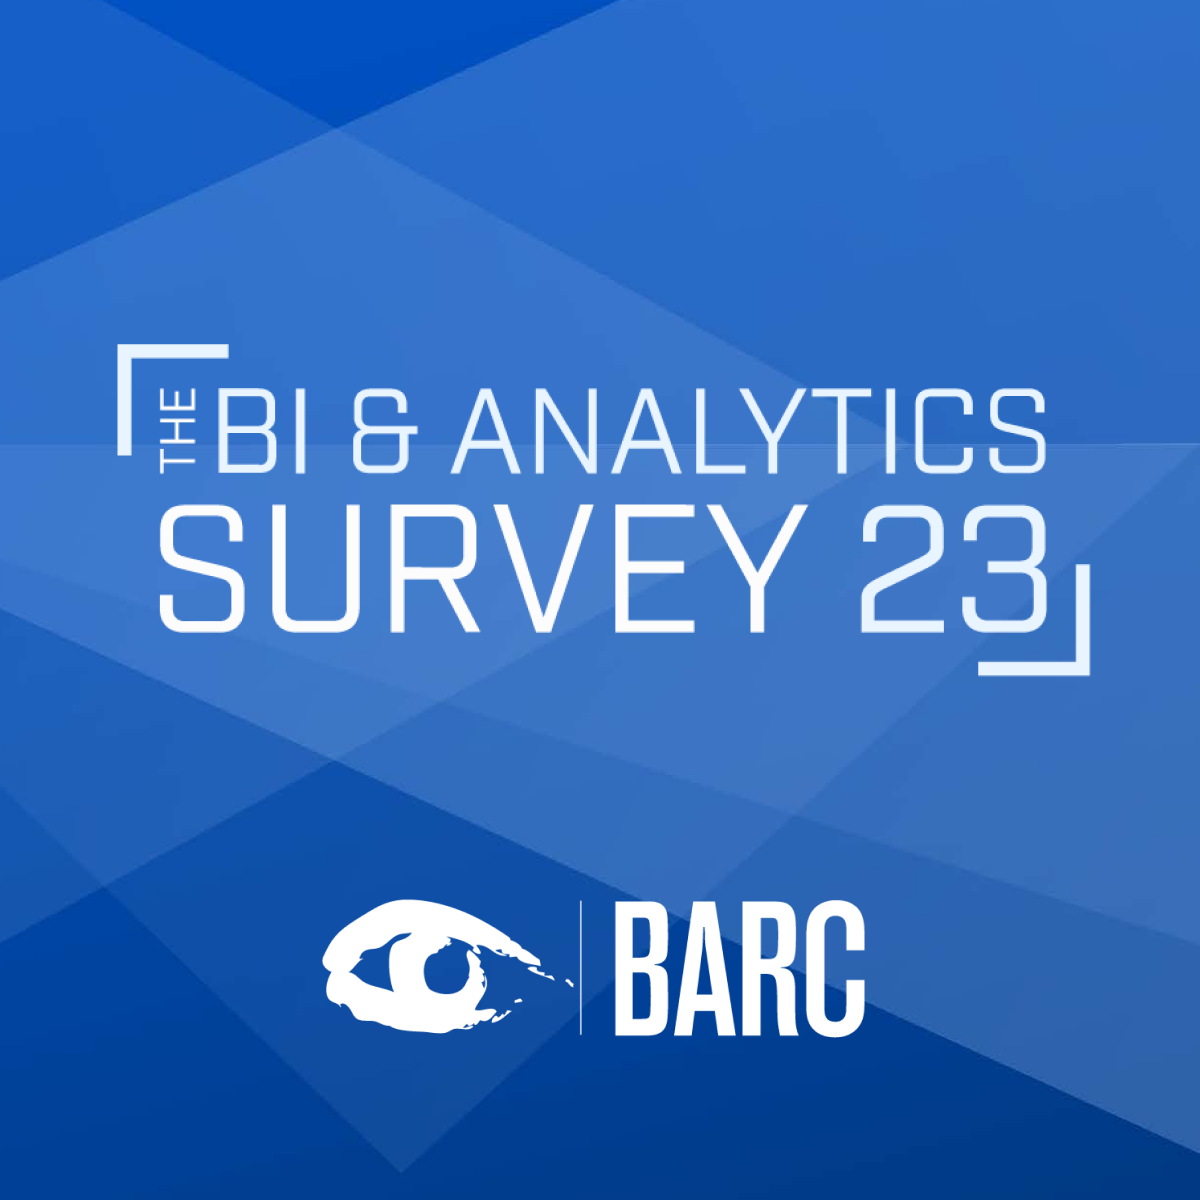 TARGIT in BARc's 2023 BI & Analytics Survey